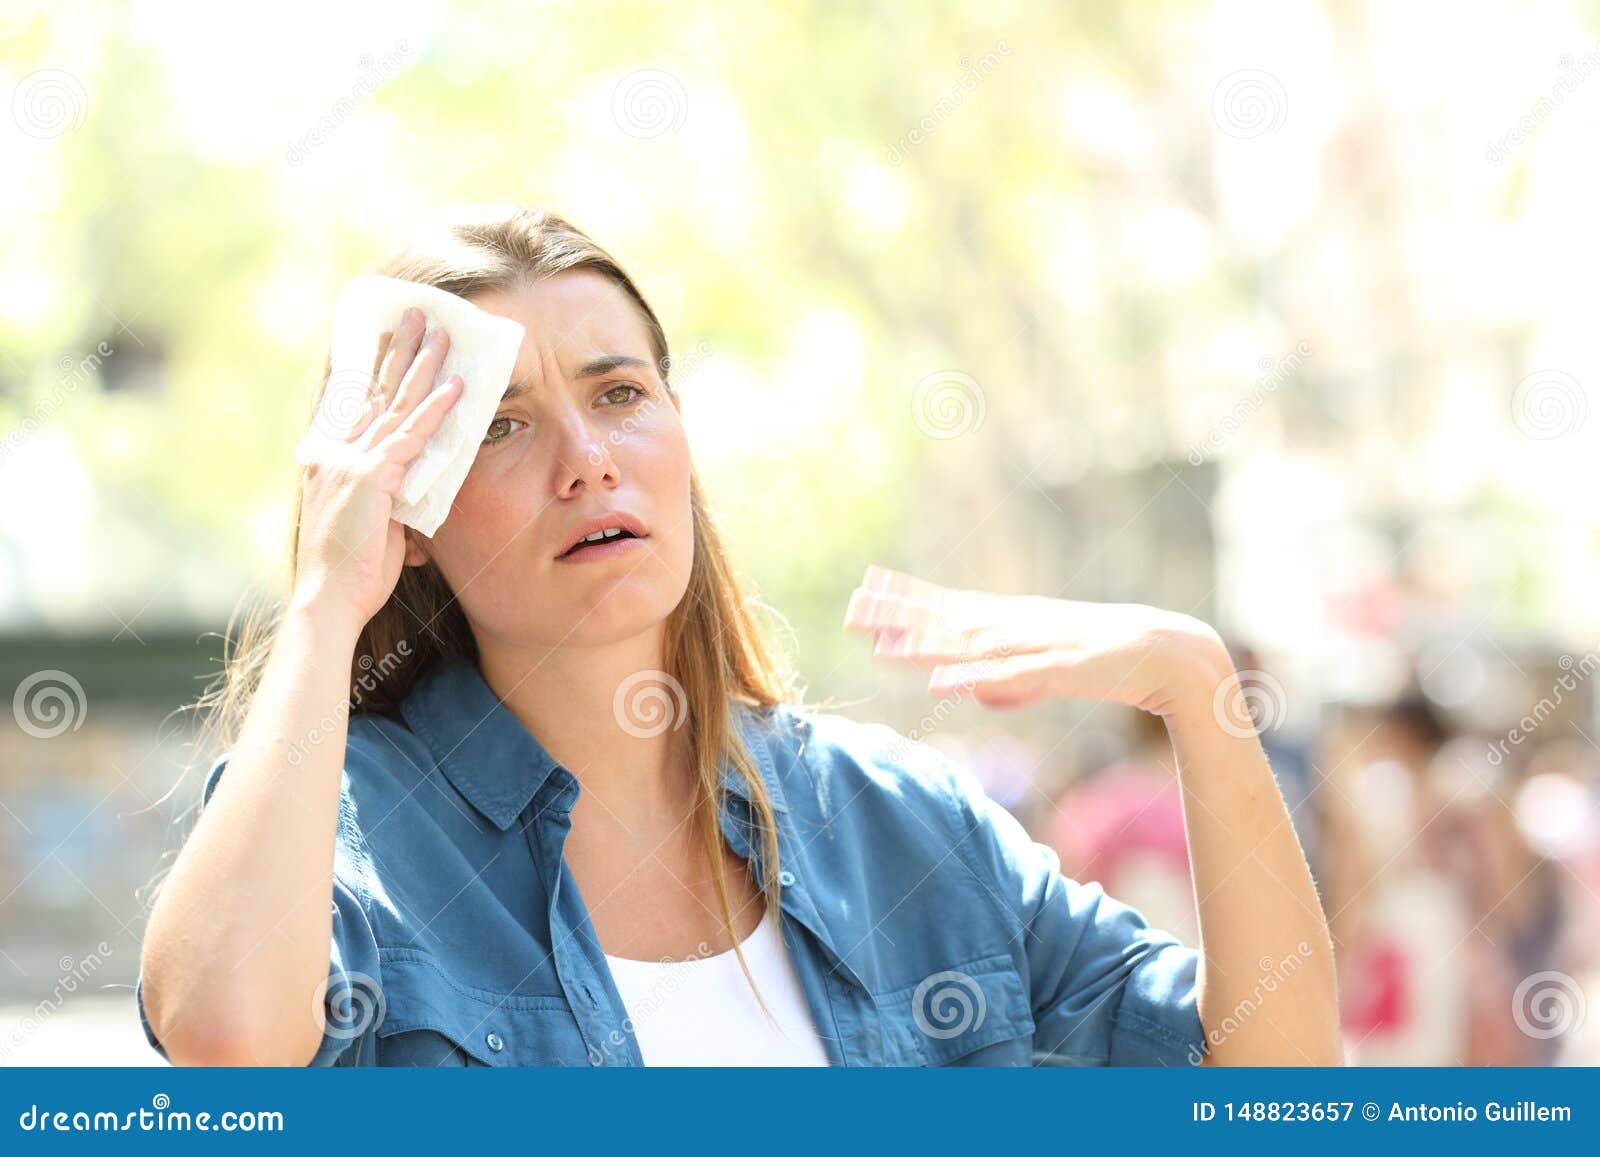 unhappy woman sweating suffering a heat stroke